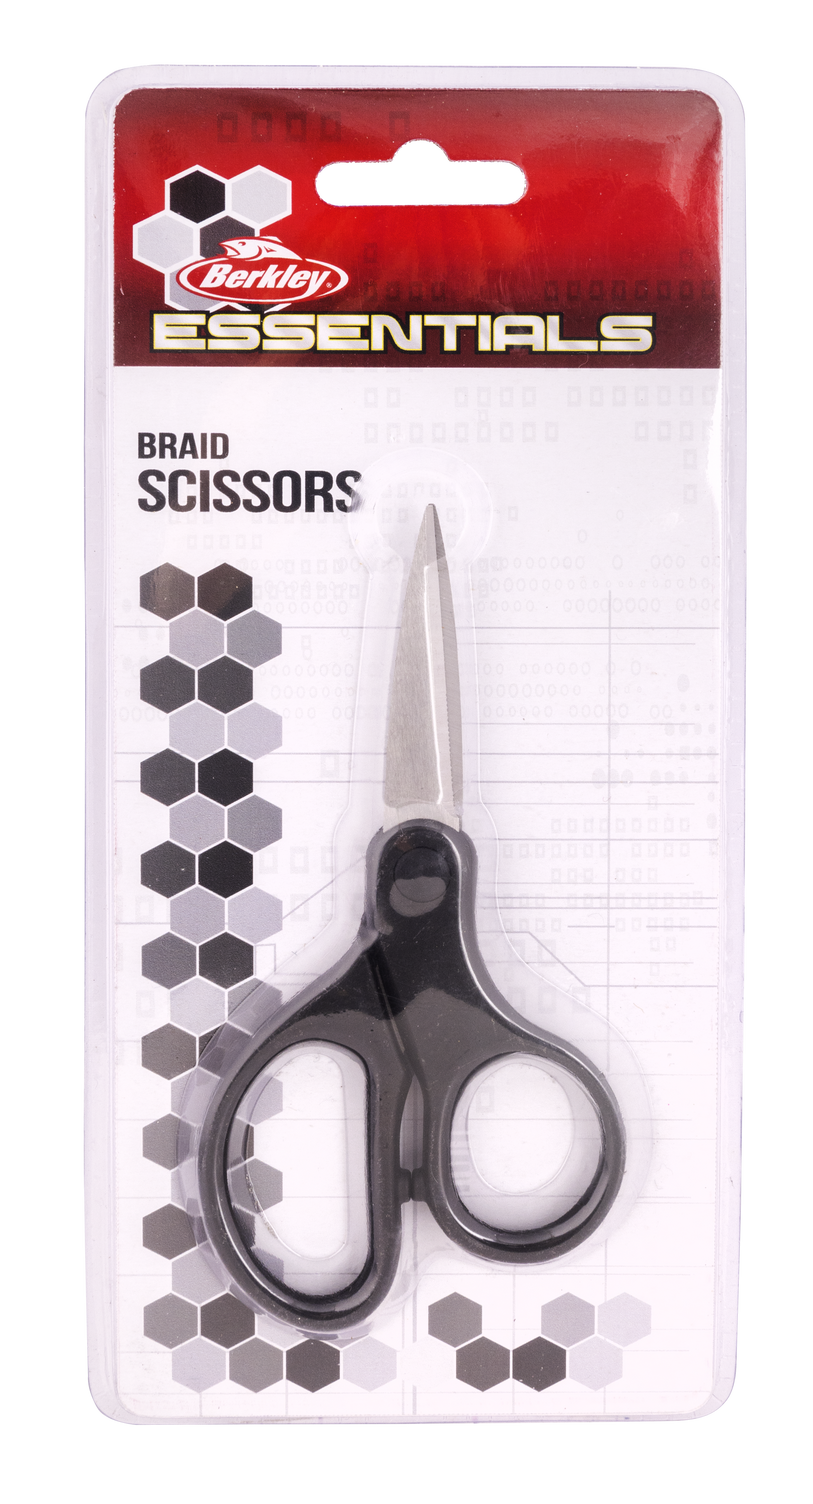 Berkley 1577553 New Essentials Braid Scissors